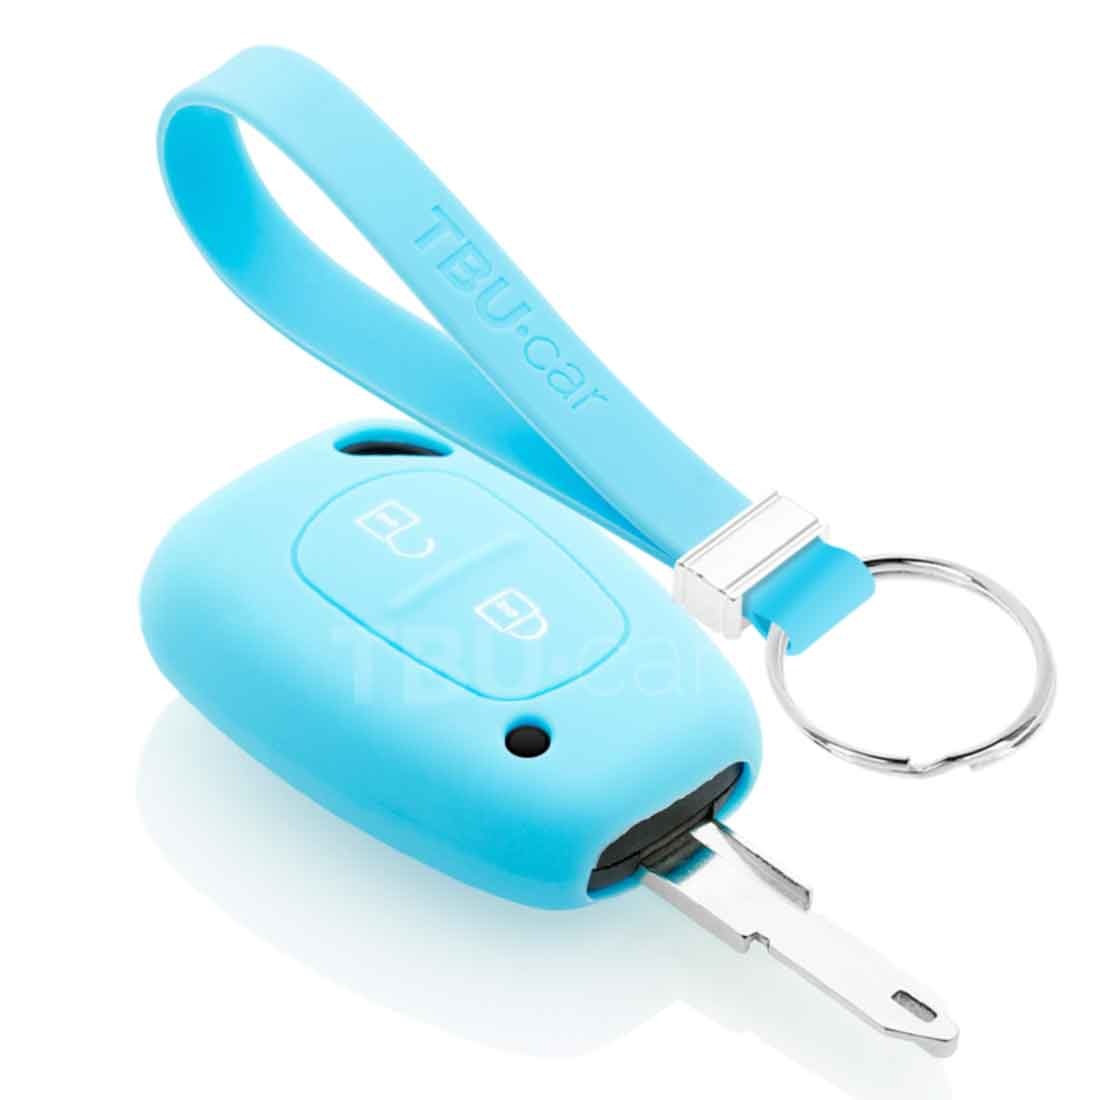 TBU car TBU car Funda Carcasa llave compatible con Nissan - Funda de Silicona - Cover de Llave Coche - Azul claro